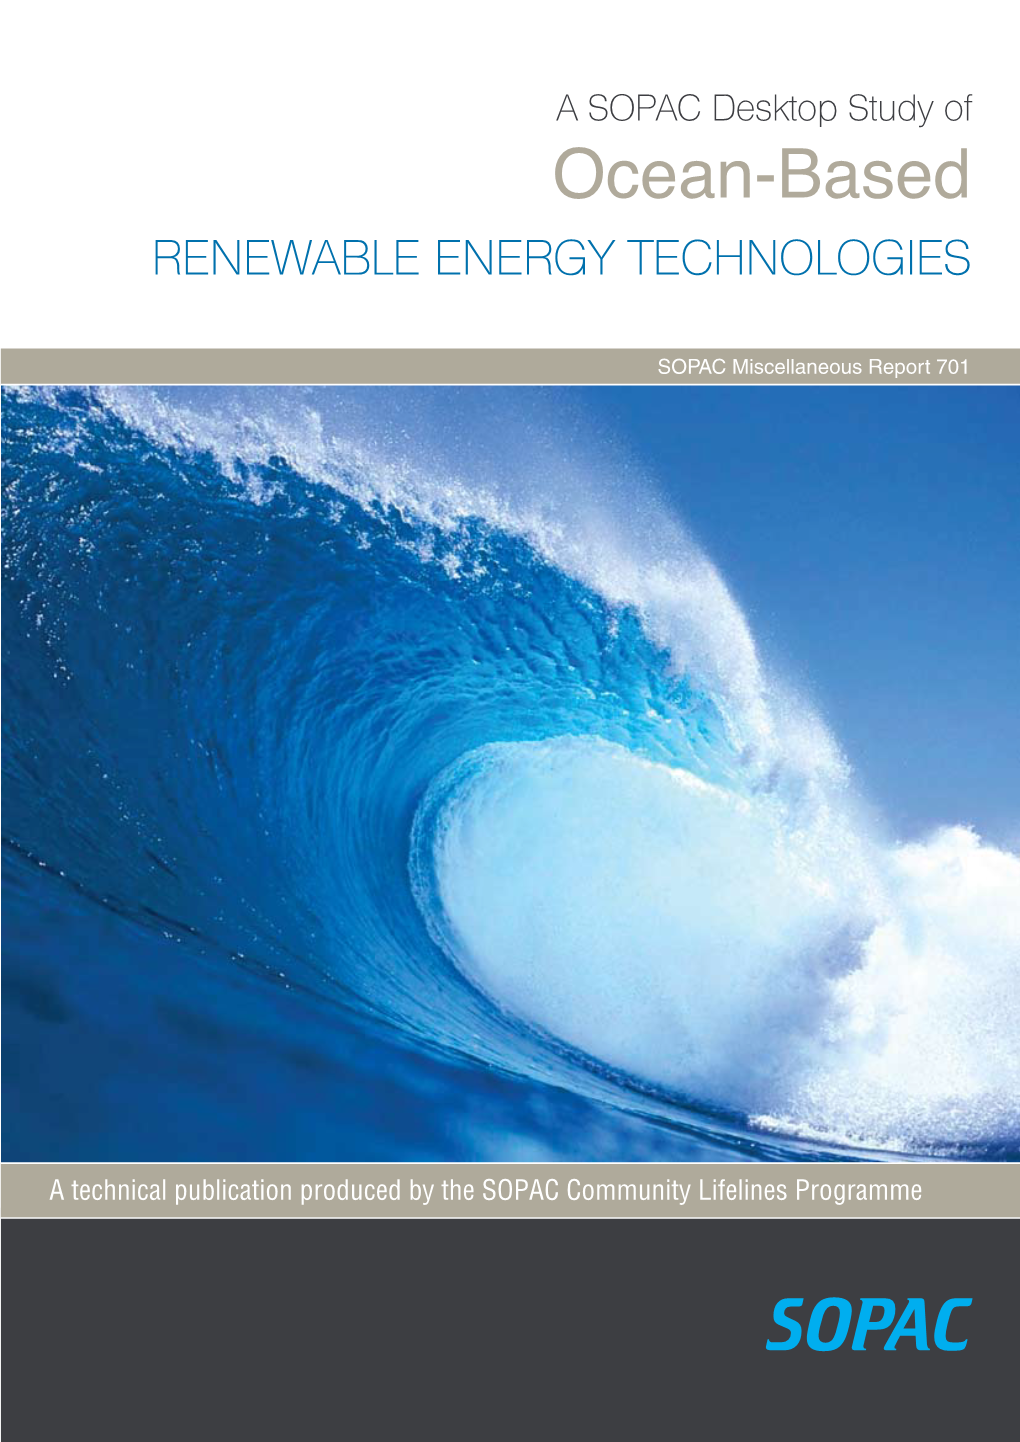 A SOPAC Desktop Study of Ocean-Based, Renewable Energy